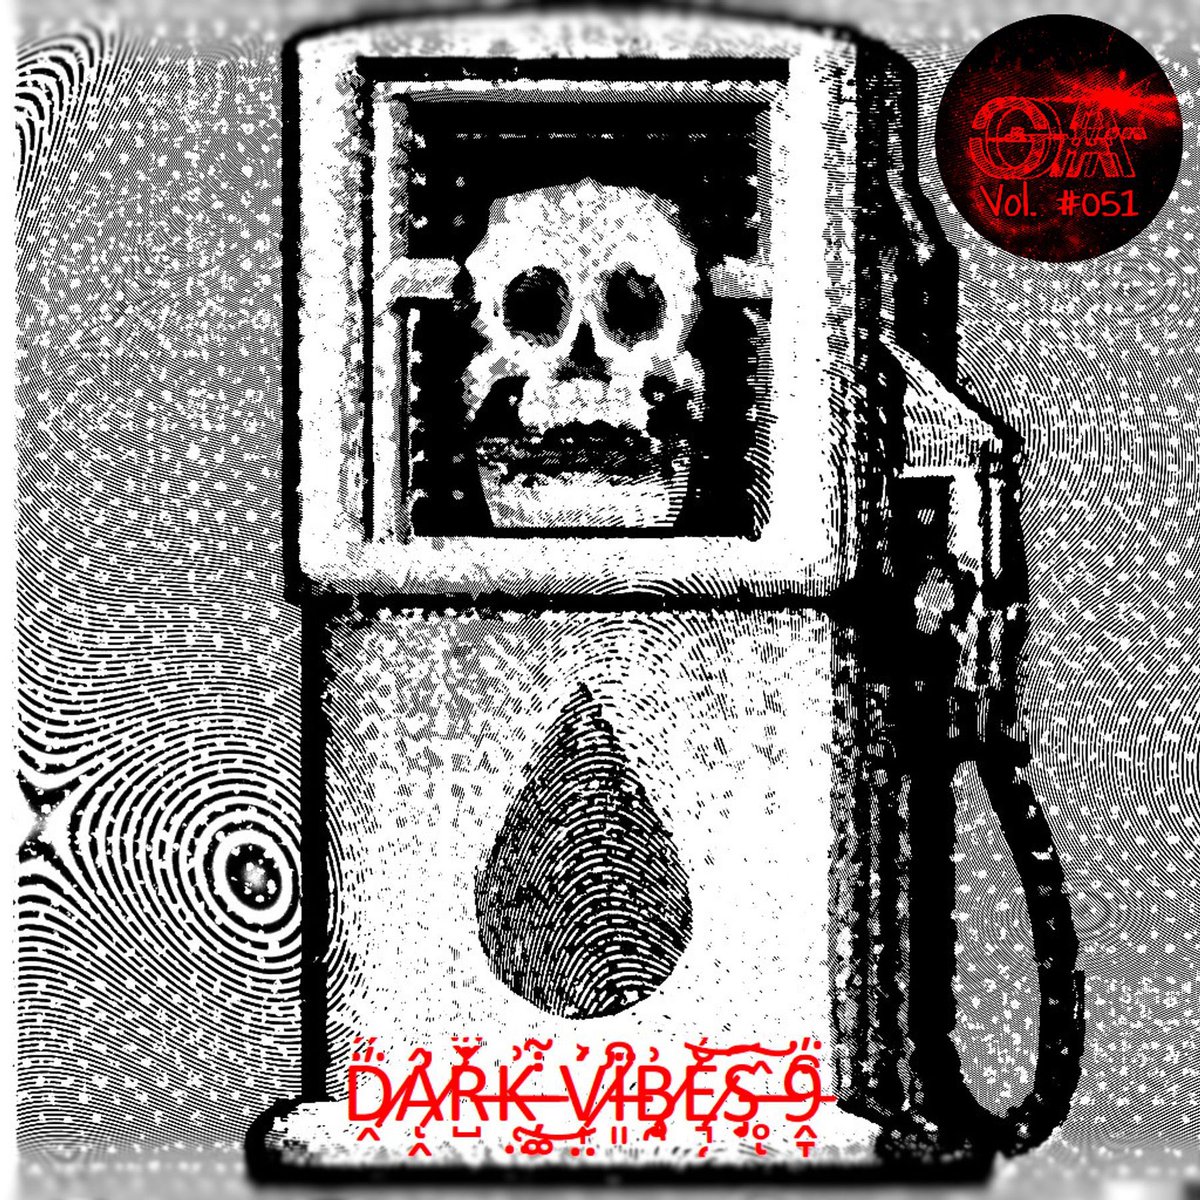 DARK VIBES 9 OUT NOW ON YOUTUBE youtu.be/3eq8VkGfhzI #music #bass #DJmix #EDM #Experimentalbass #leftfield #darkvibes